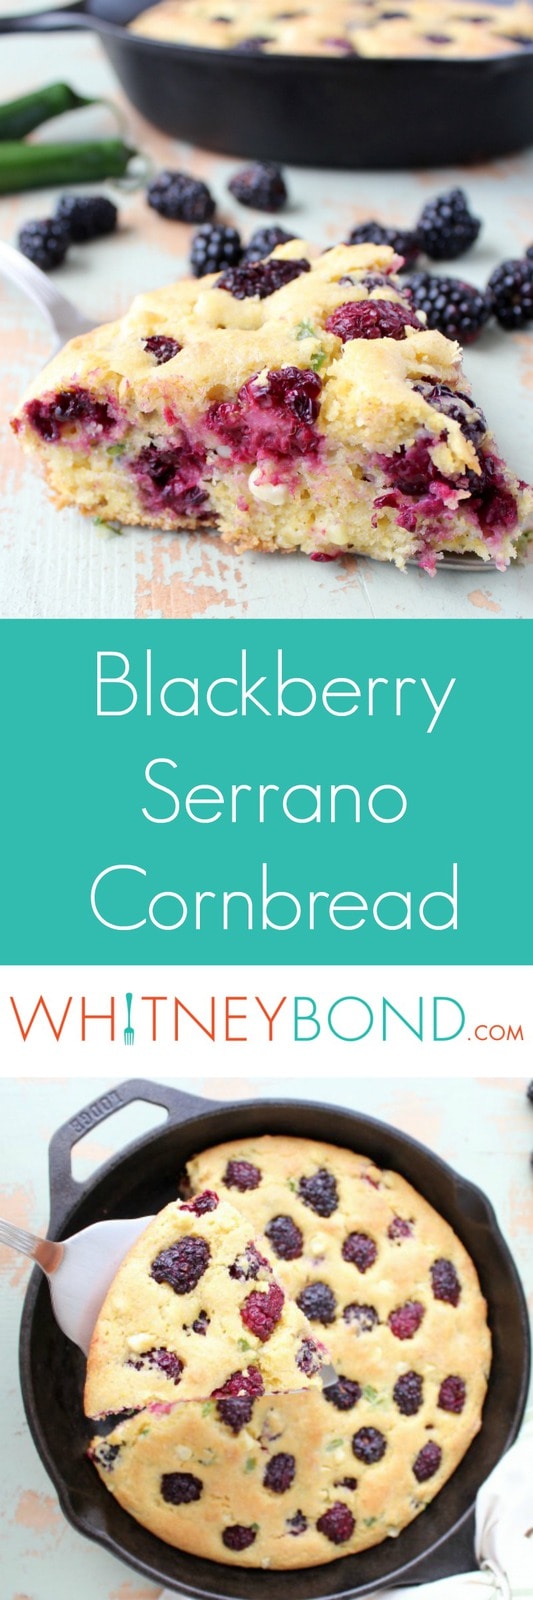 Blackberry Serrano Cornbread Recipe - WhitneyBond.com